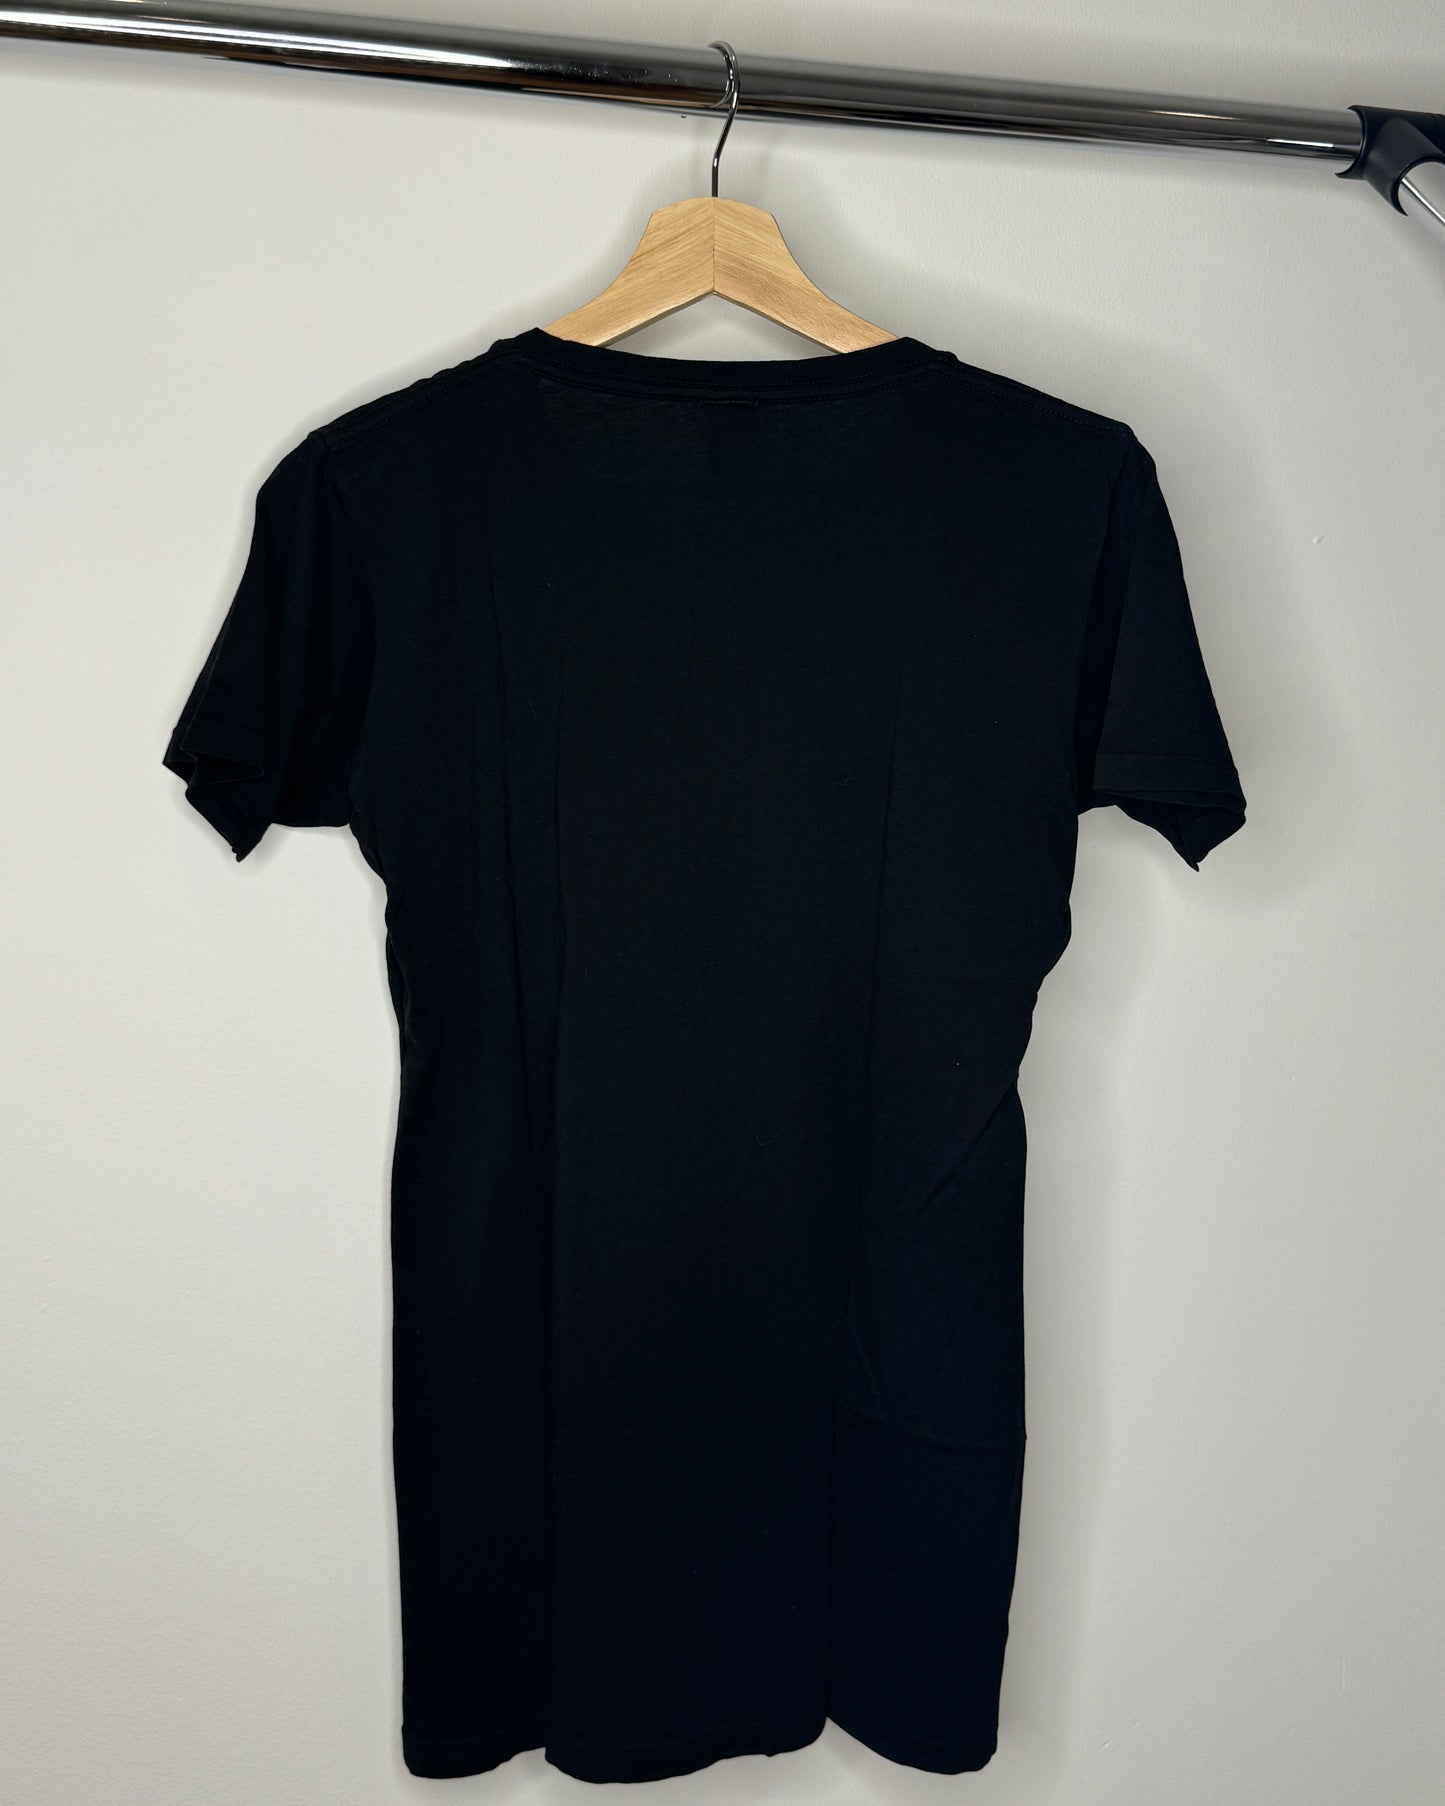 ORIGINAL Calm T-Shirt Black/Green XL-5XL